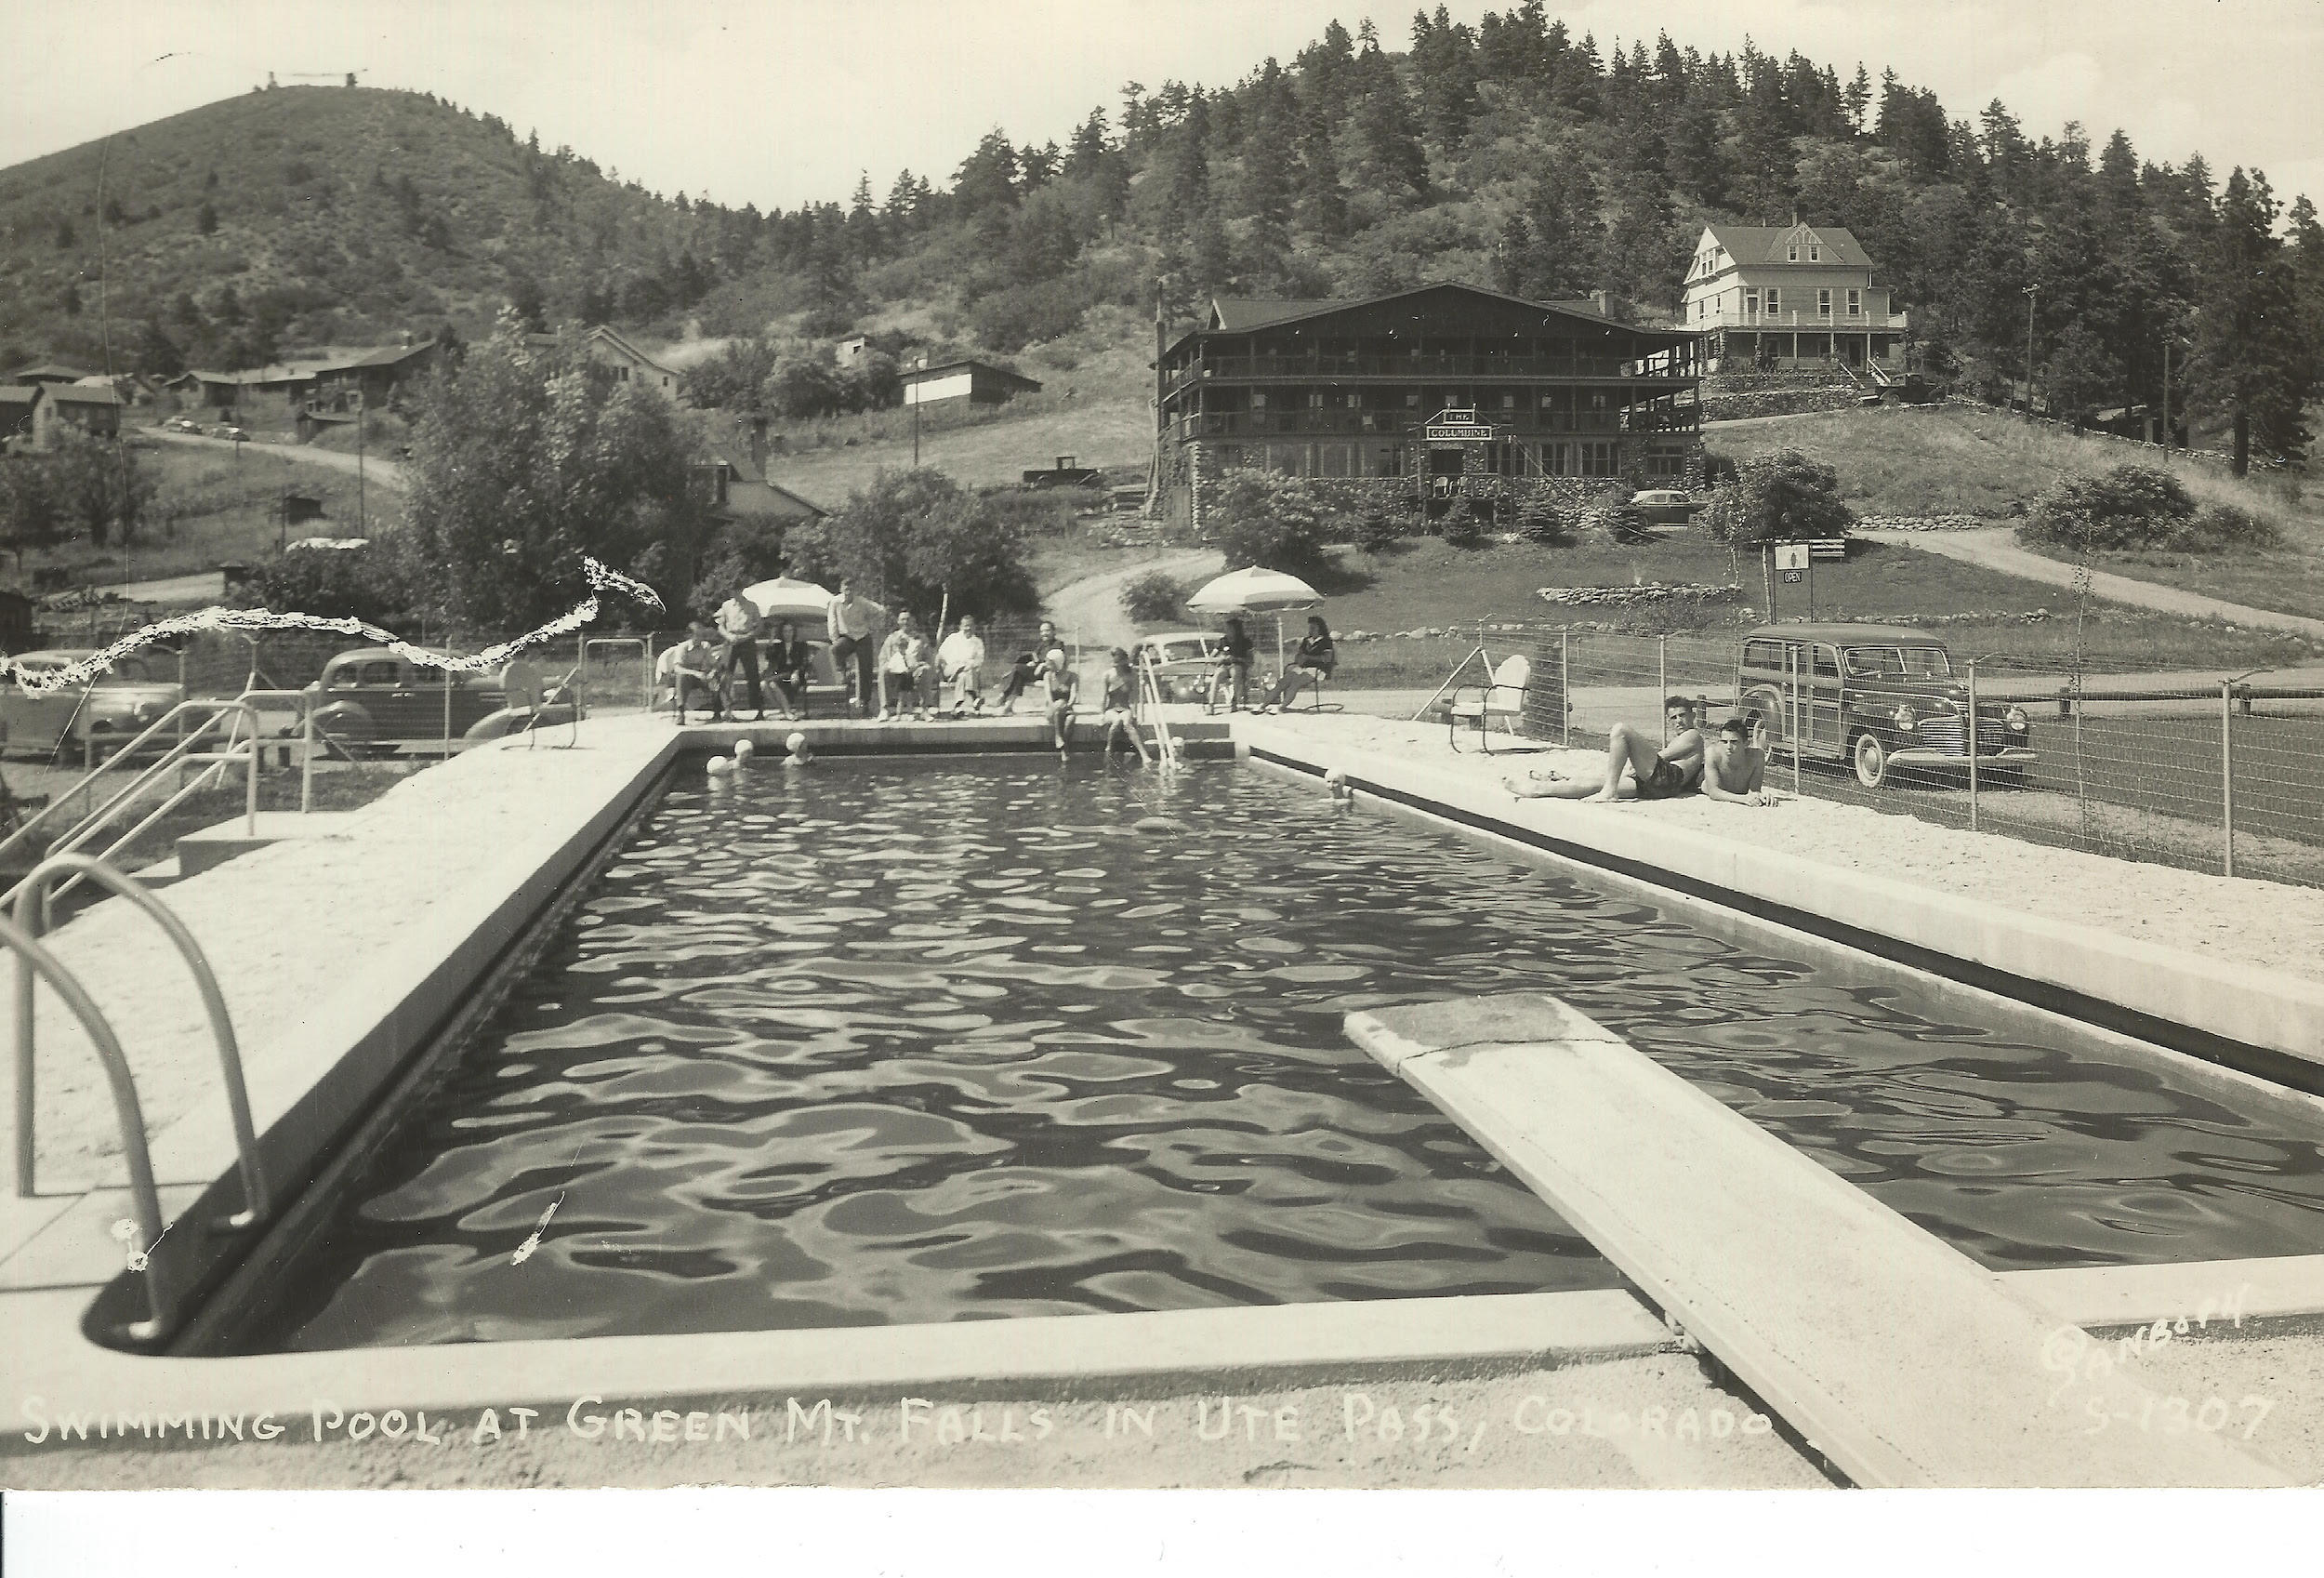 Historic Pool